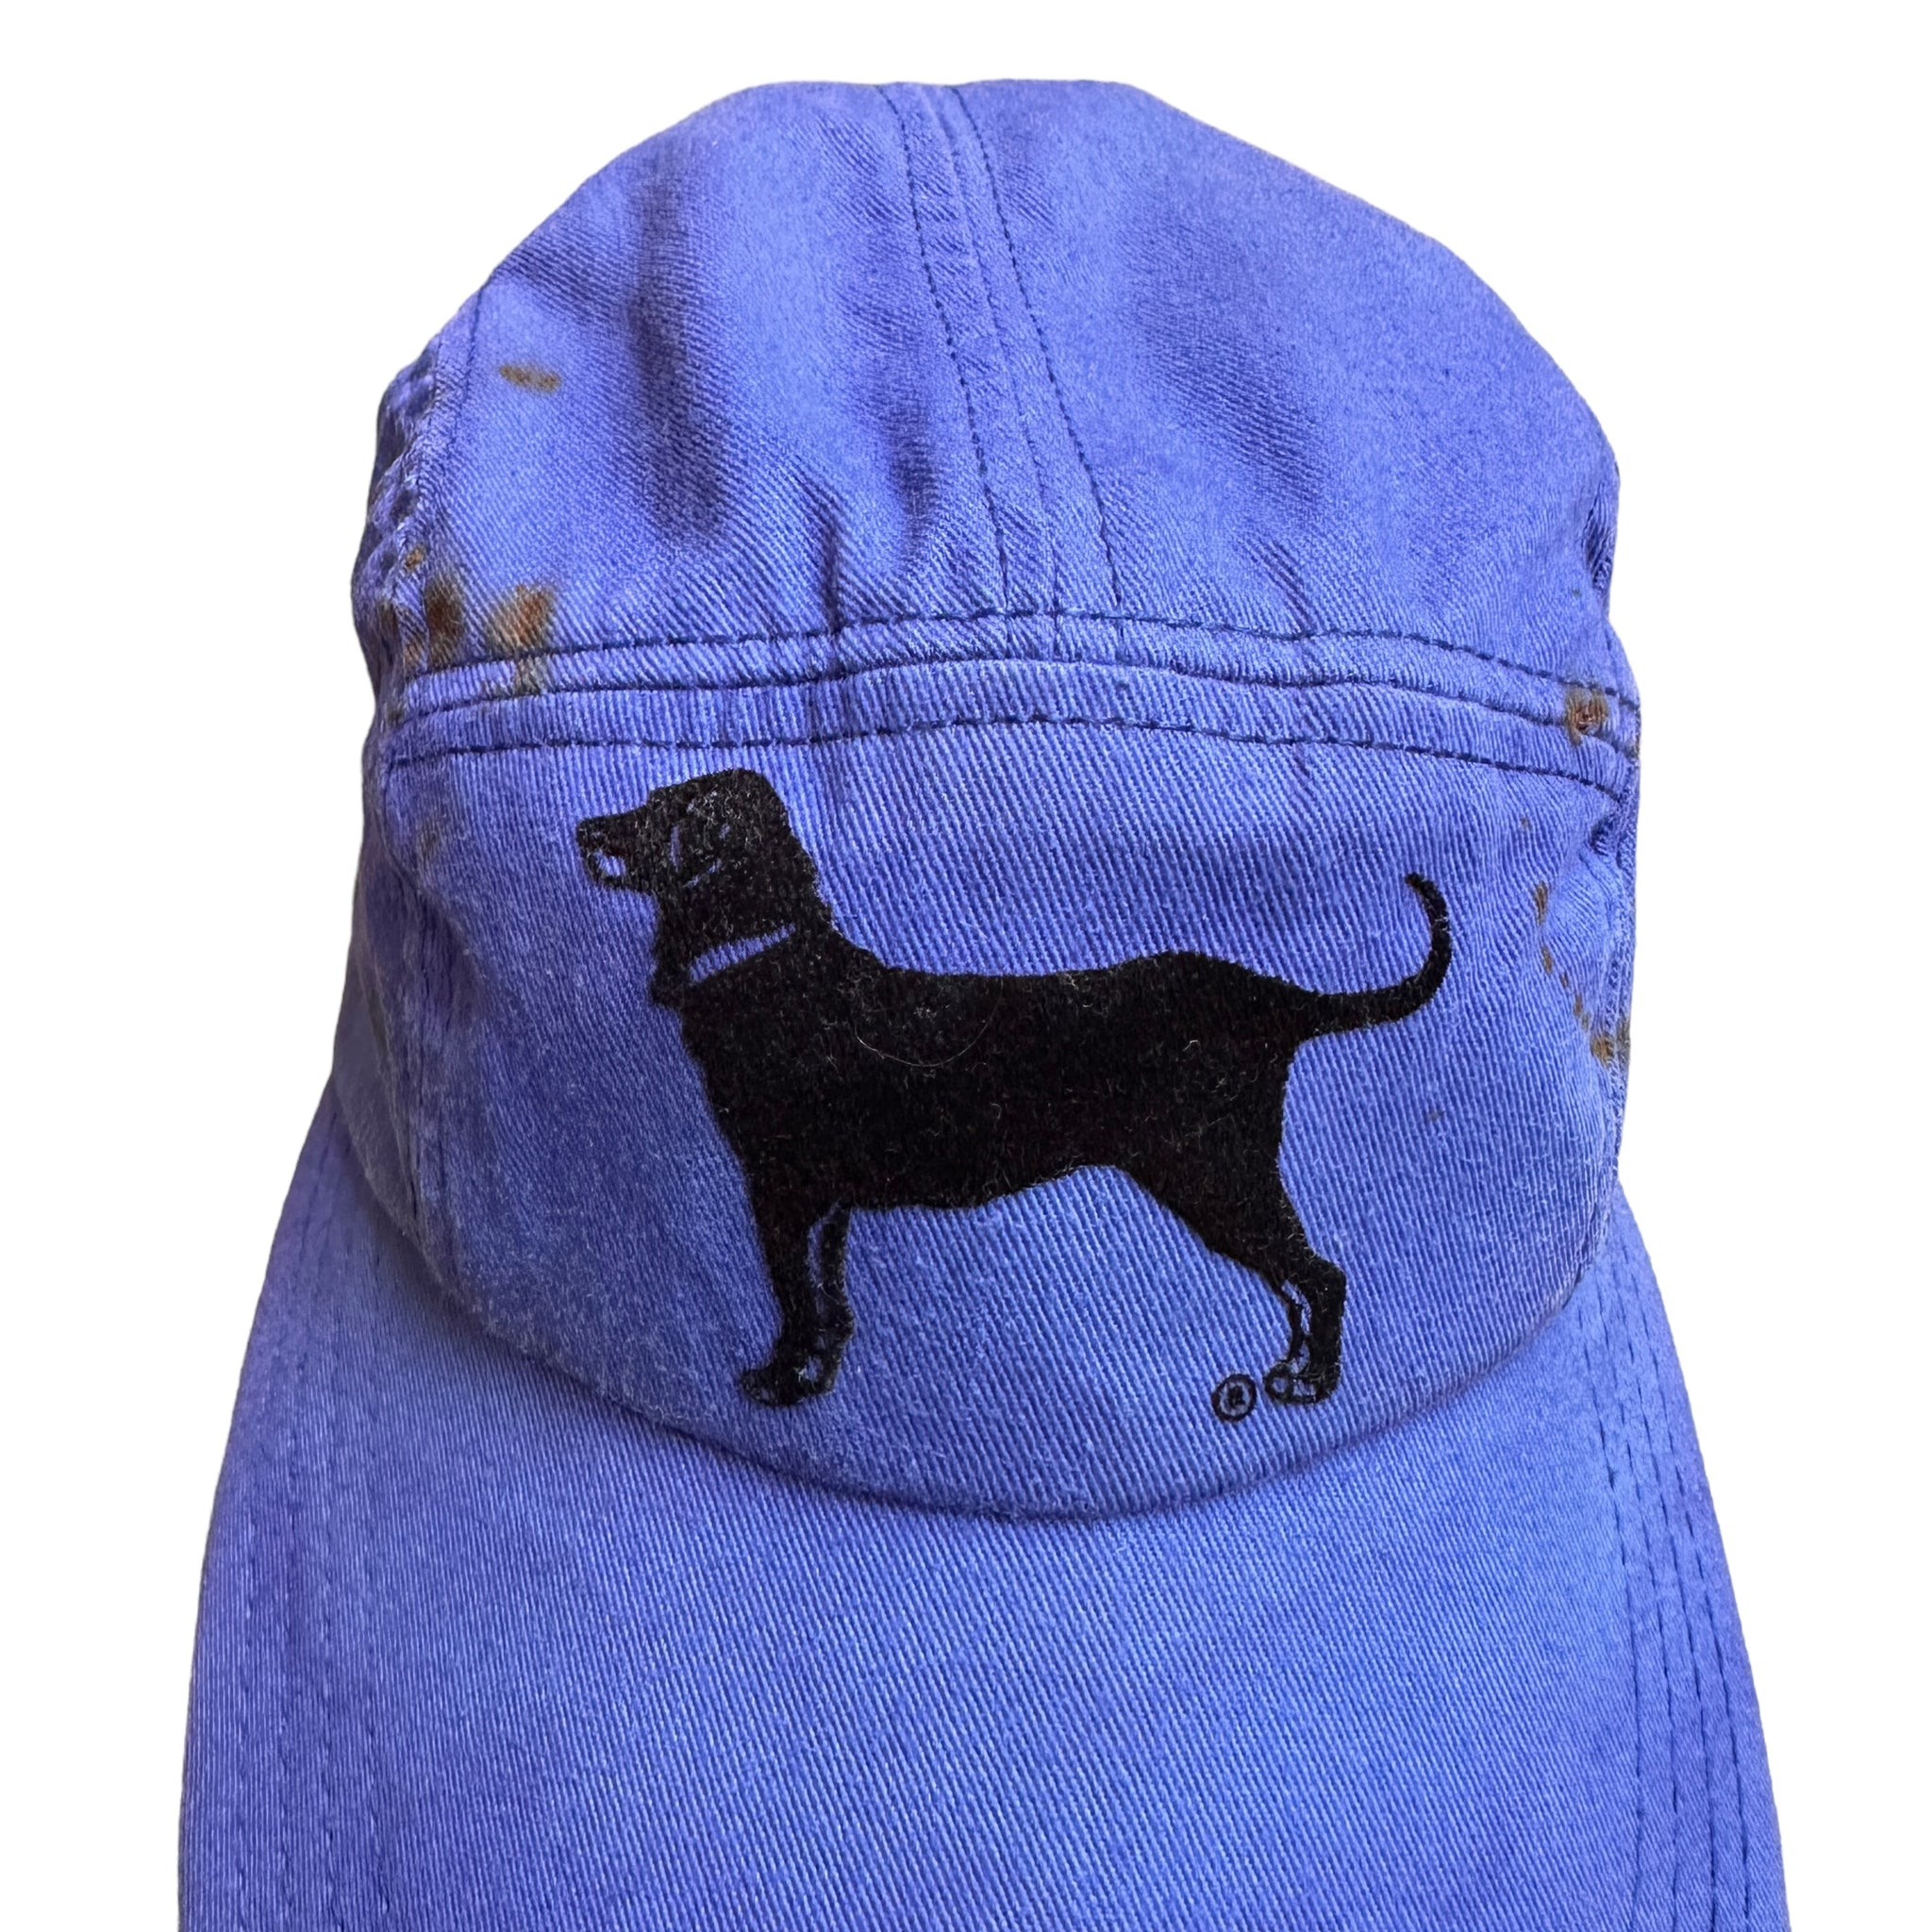 The black dog big brim Made in usa🇺🇸 hat